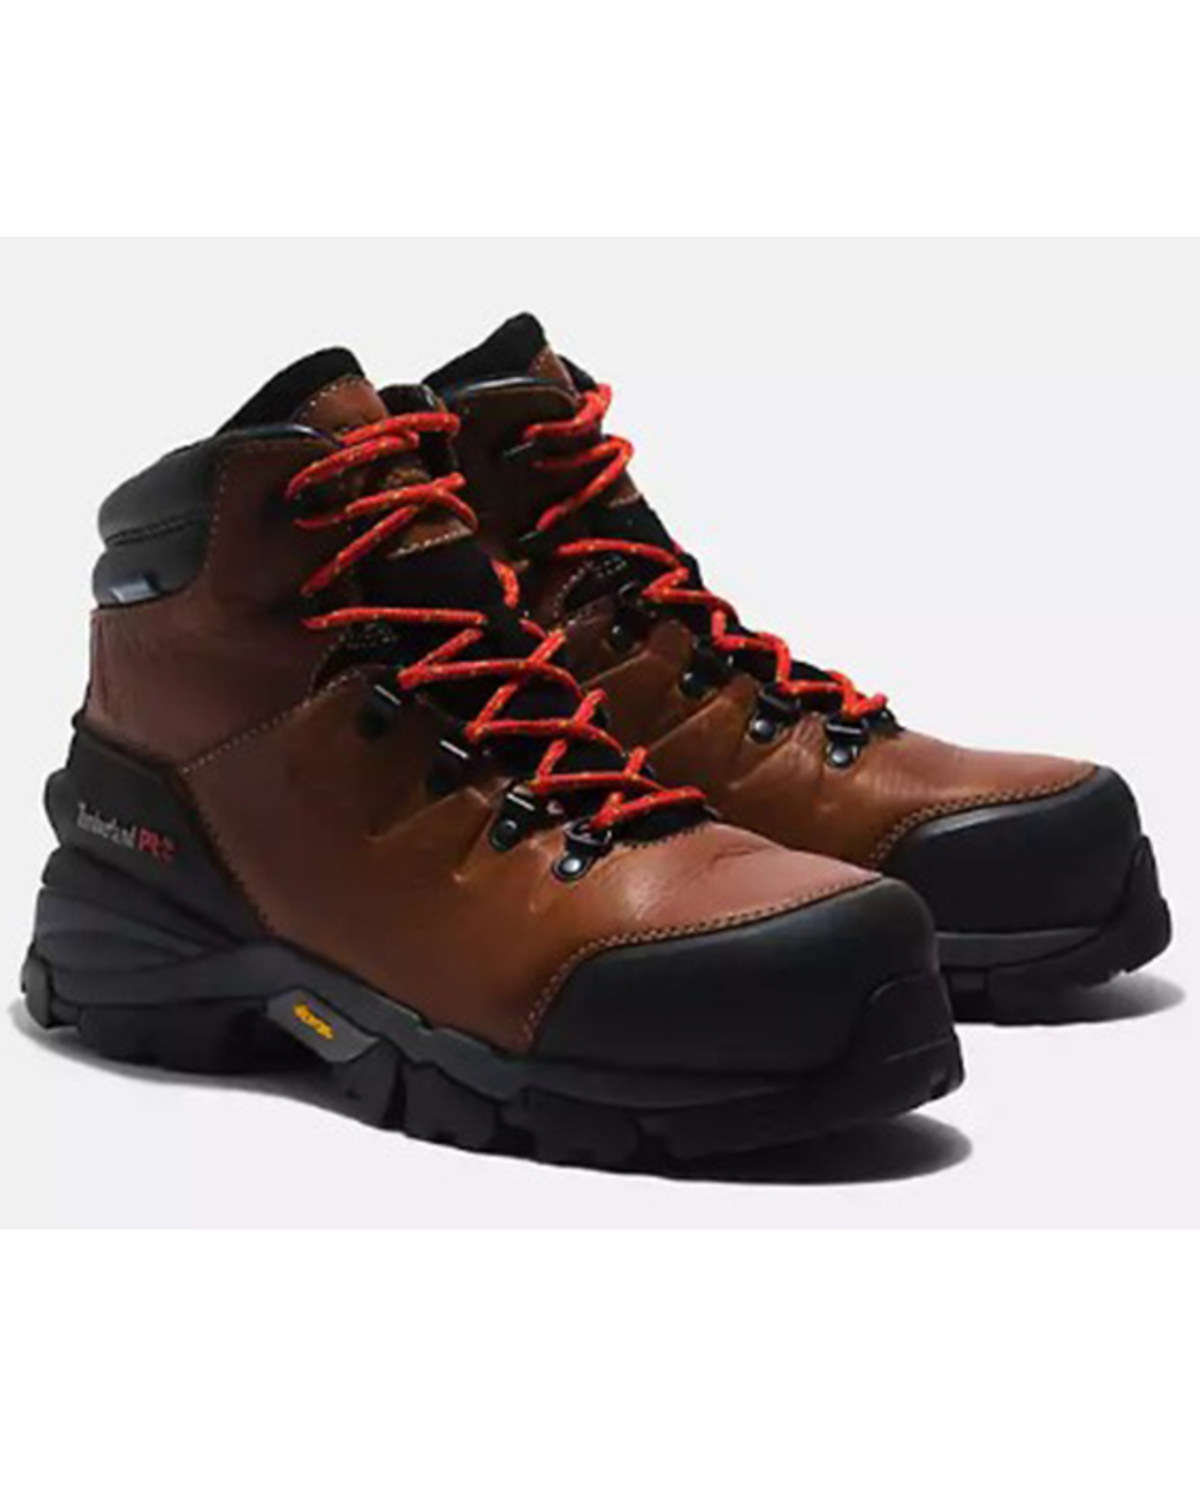 Timberland Men's Heritage 6" Hyperion Waterproof Work Boots - Composite Toe